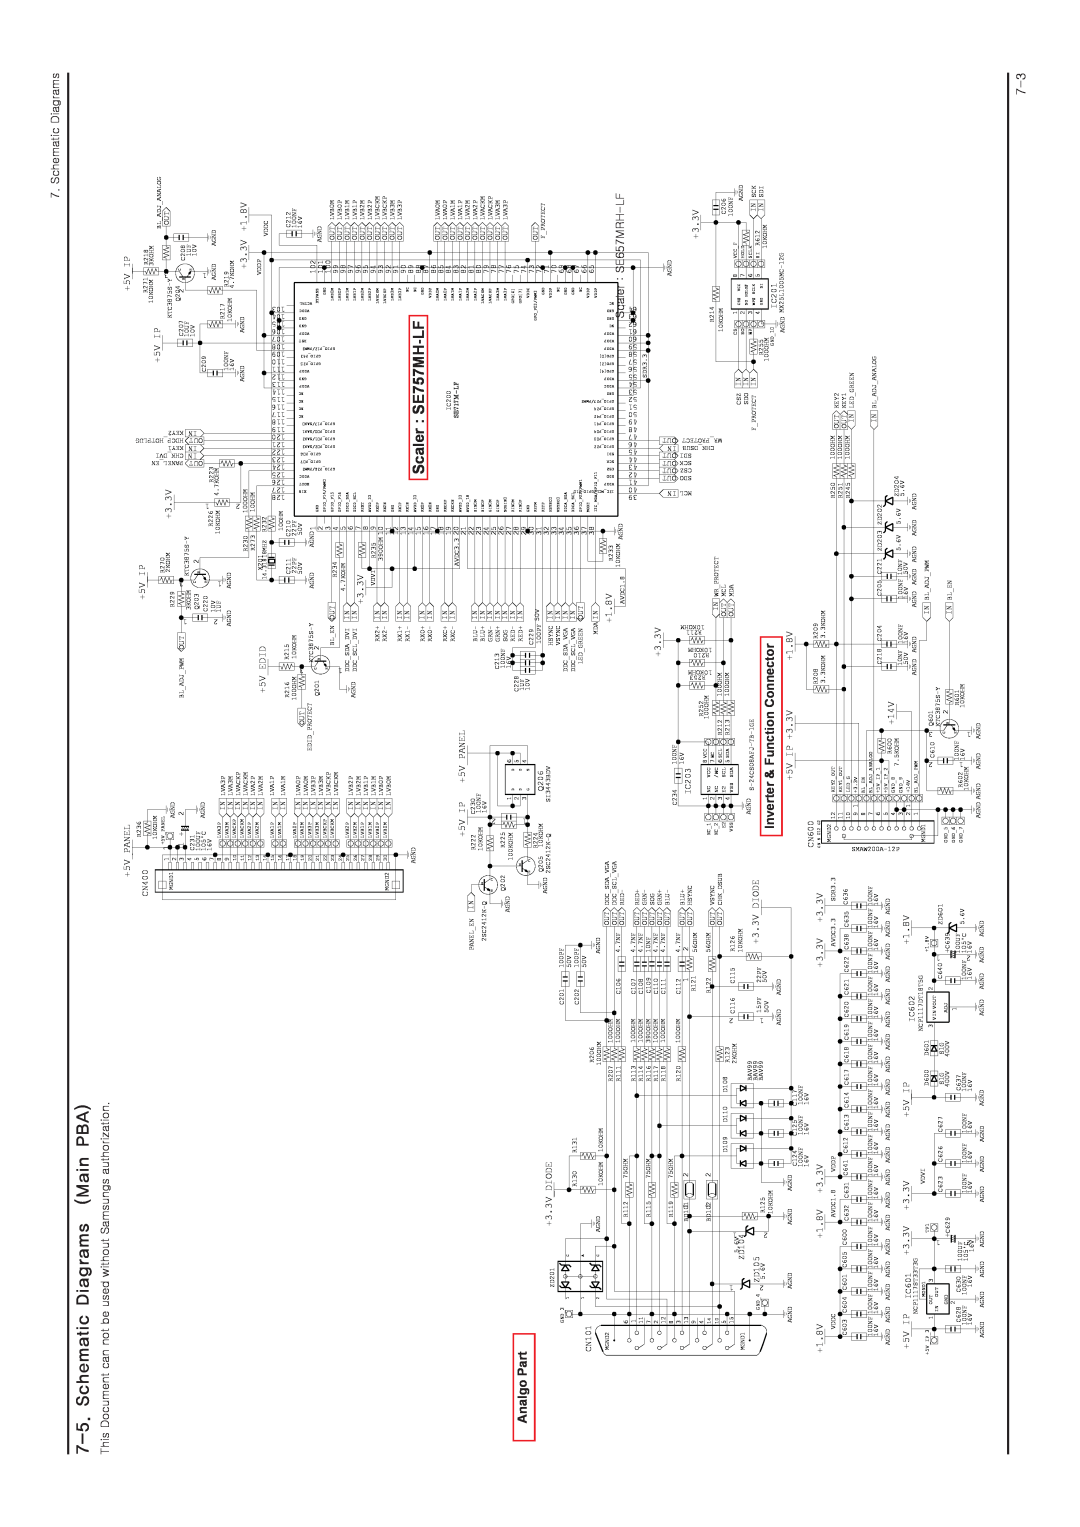 Samsung 943NWX service manual Schematic Diagrams Main PBA, Scaler SE757MH-LF, Analgo Part, Inverter & Function Connector 